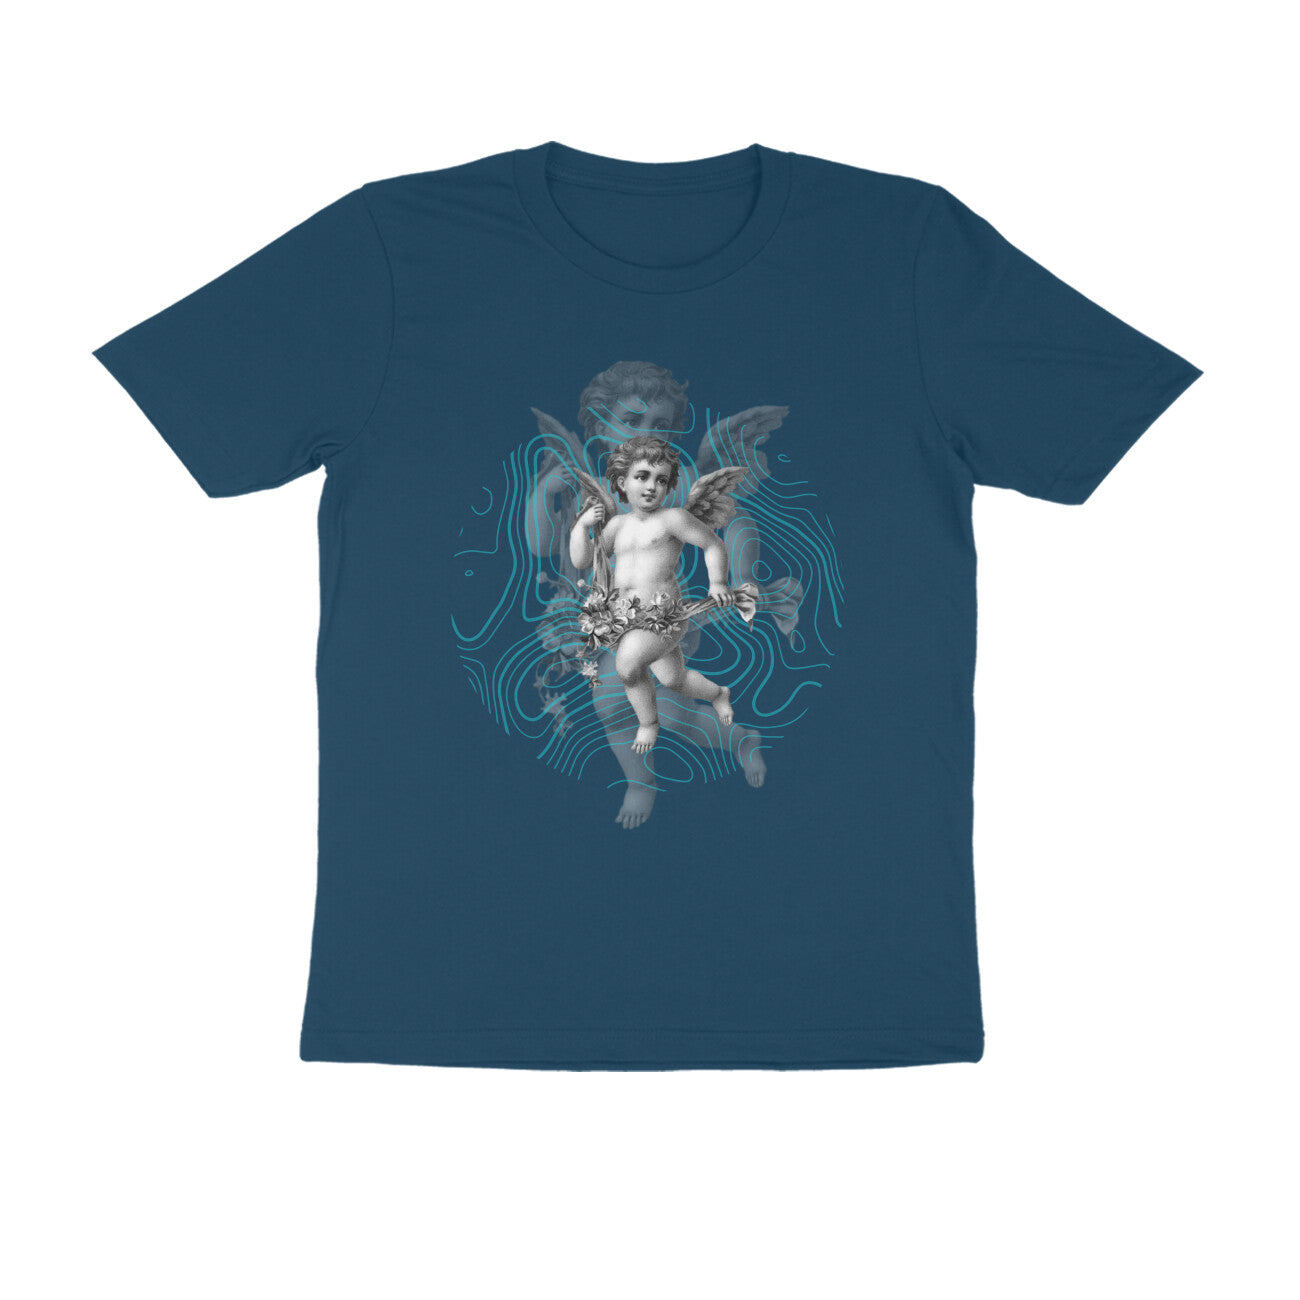 Black Teal Gothic Cupid Illustration Men's Half Sleeve Round Neck T-Shirt